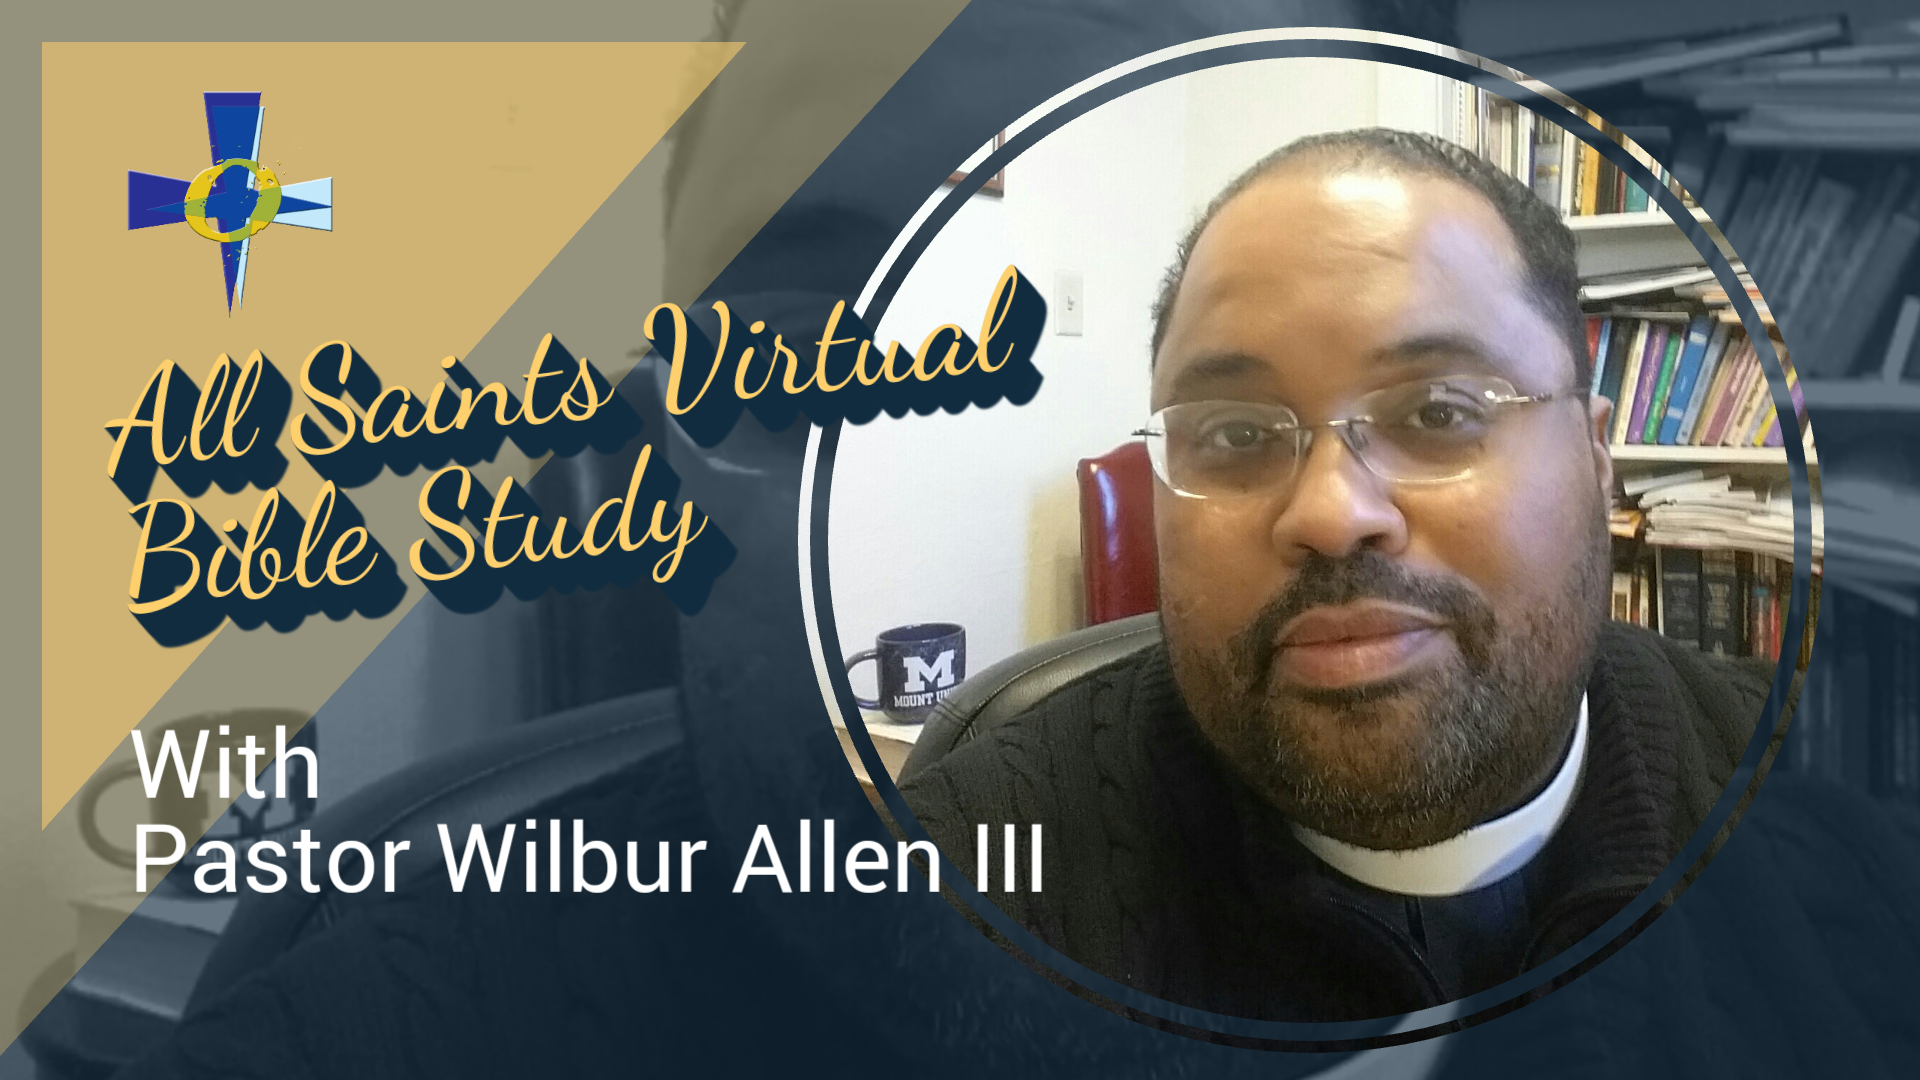 All Saints Virtual Bible Study - The New Jerusalem